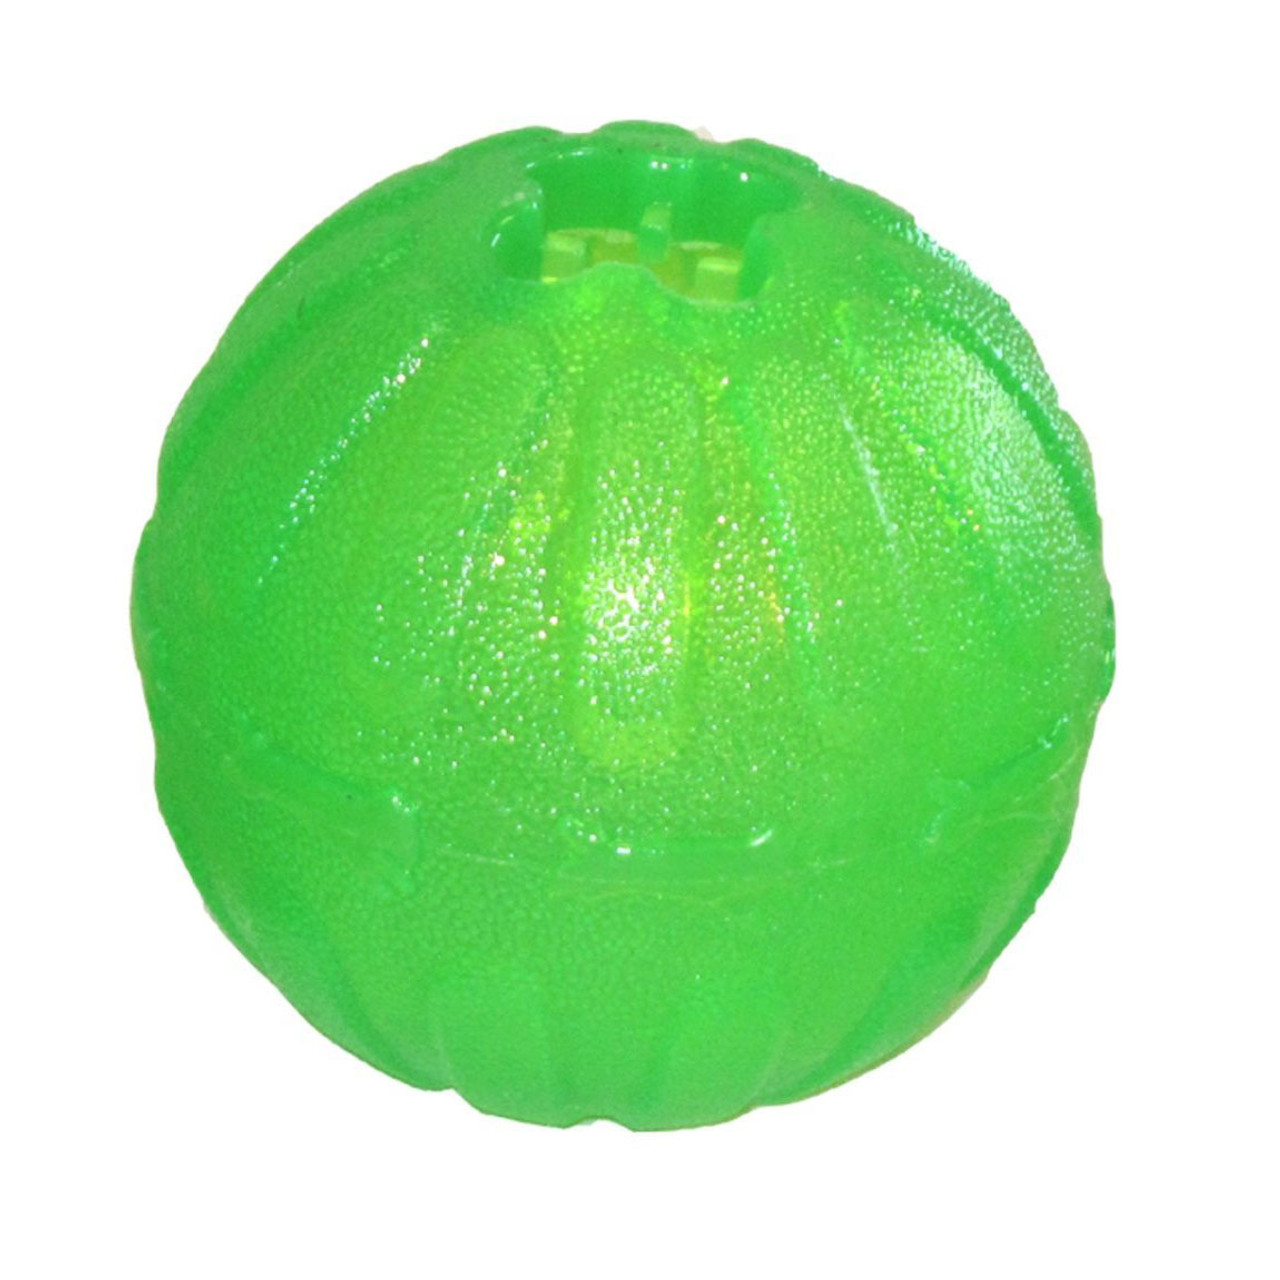 Starmark Treat Dispensing Chew Ball, Medium